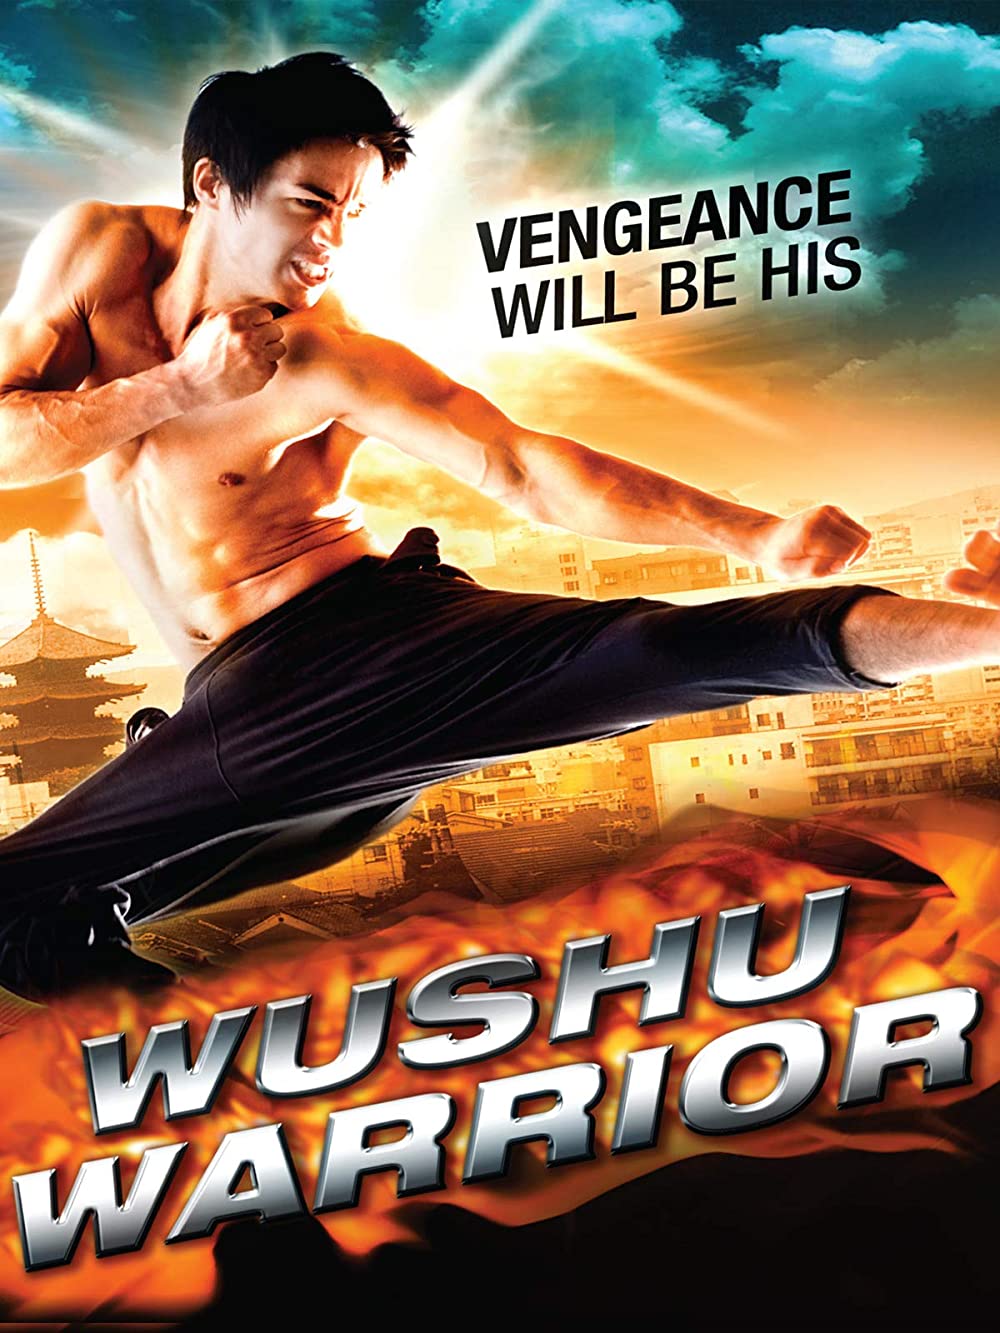 Wushu Warrior (2011) Hindi Dubbed UNCUT BluRay download full movie